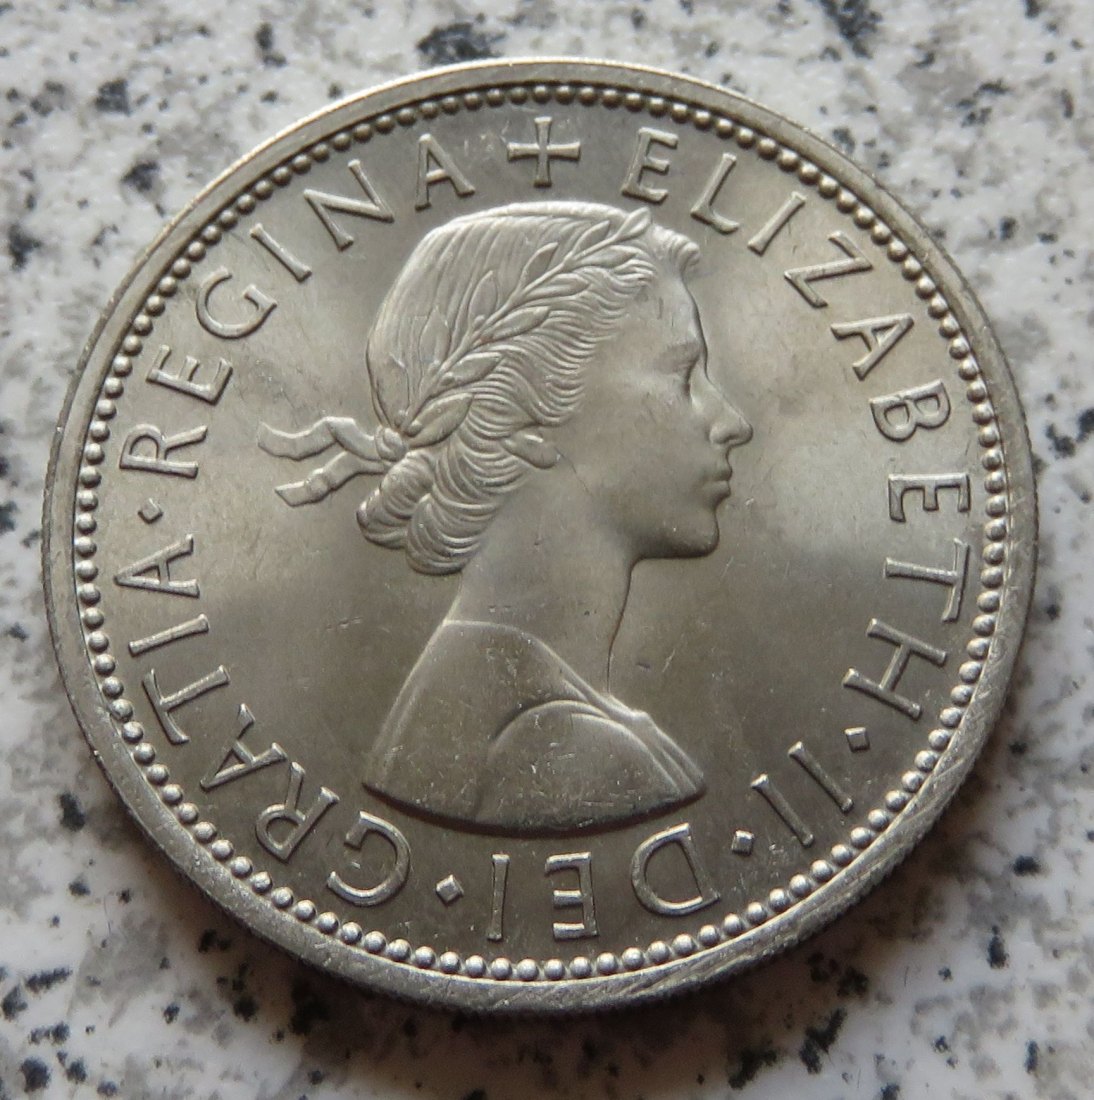  Großbritannien 2 Shillings 1965 funz/unz   